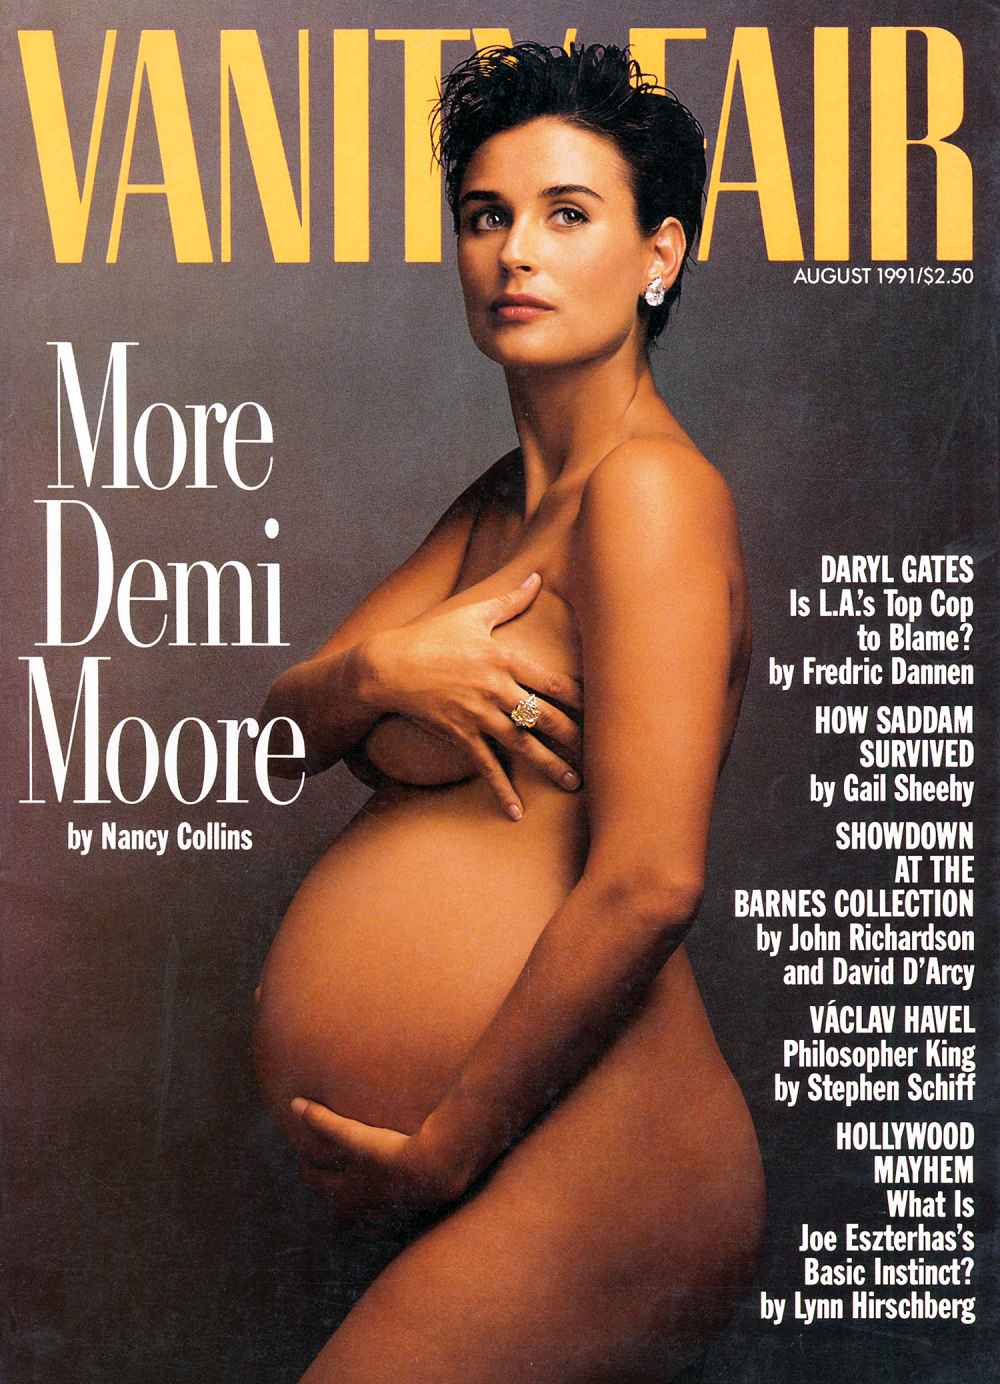 Demi Moore Vanity Fair cover 1991